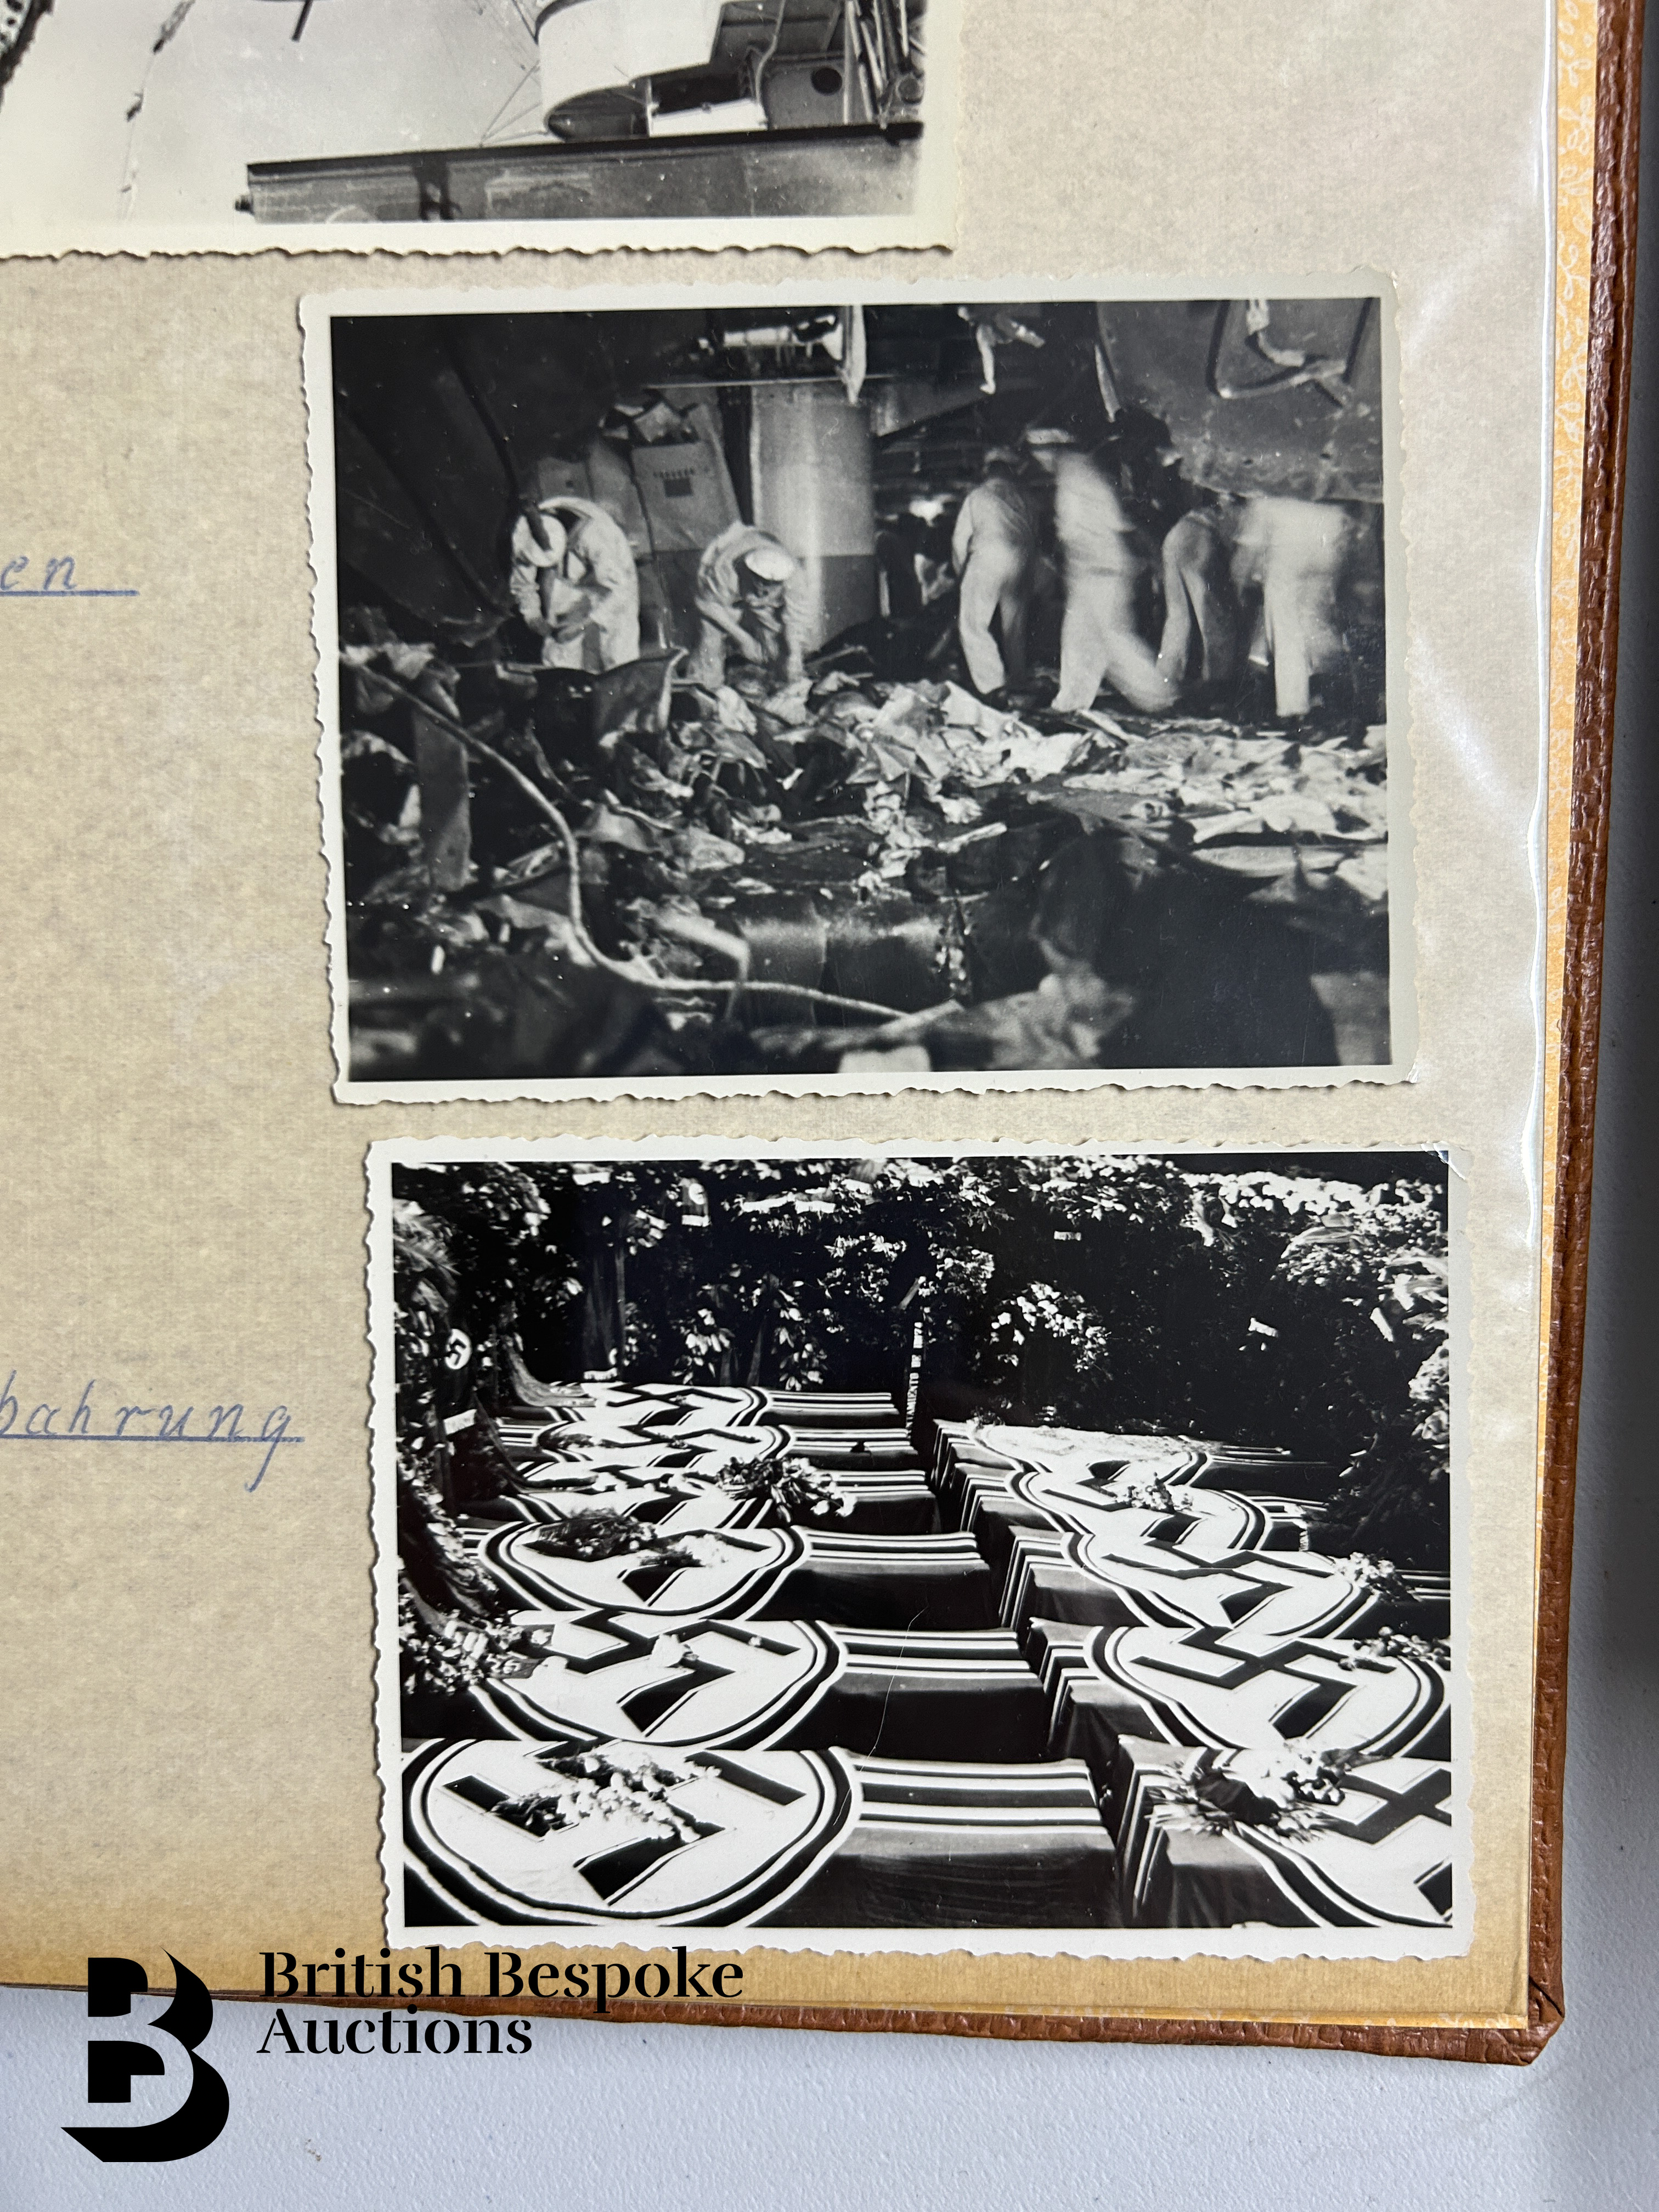 Graf Spee (Pocket Battleship) Interest, incl. Photographs, Documents, Miscellanea - Image 68 of 126